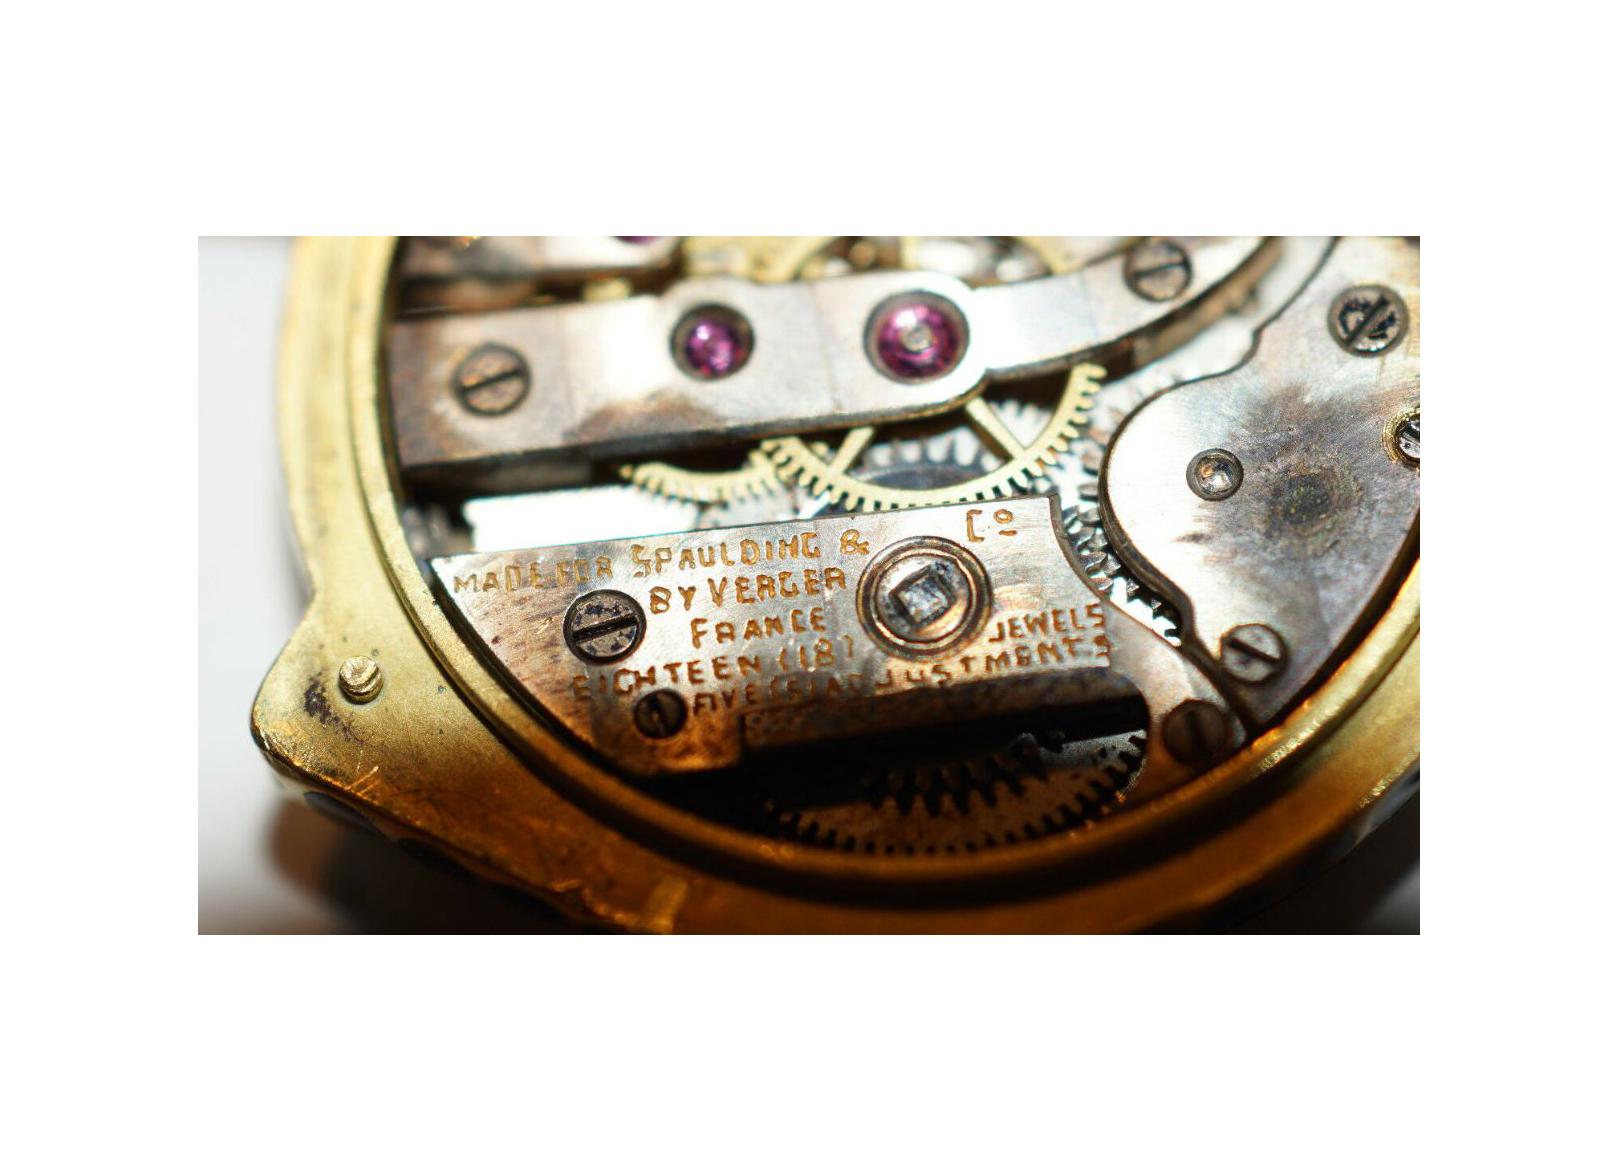 Verger Freres 1901 Spaulding & Co Edwardian Watch-Pendant Guilloche 18Kt Diamond For Sale 2